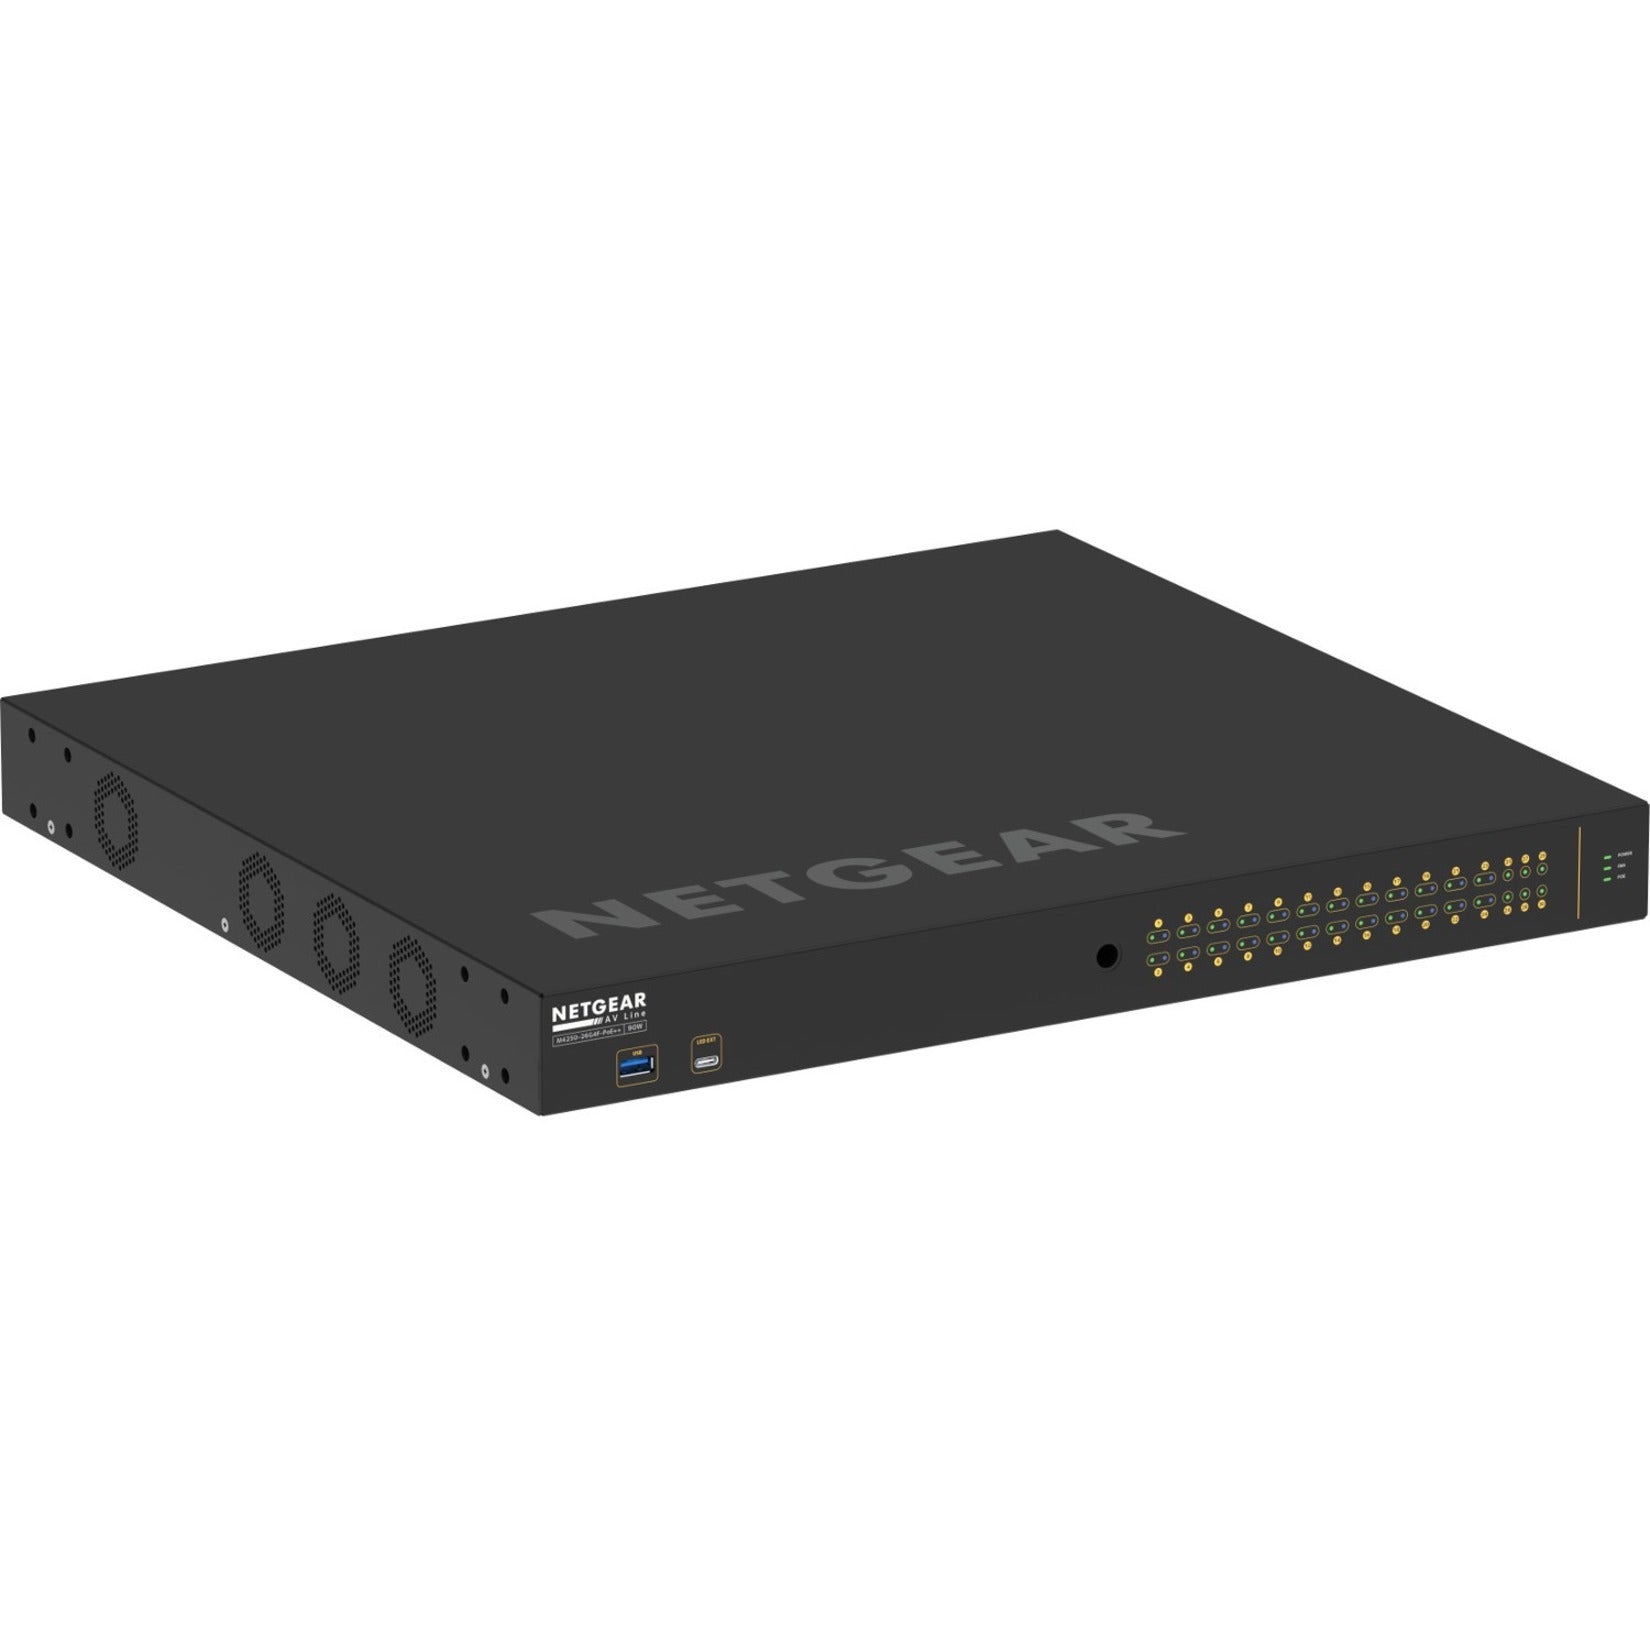 Netgear GSM4230UP-100NAS M4250-26G4F-PoE++ AV Line Managed Switch, 24 Port Gigabit Ethernet with 4 SFP Slots, 1440W PoE Budget